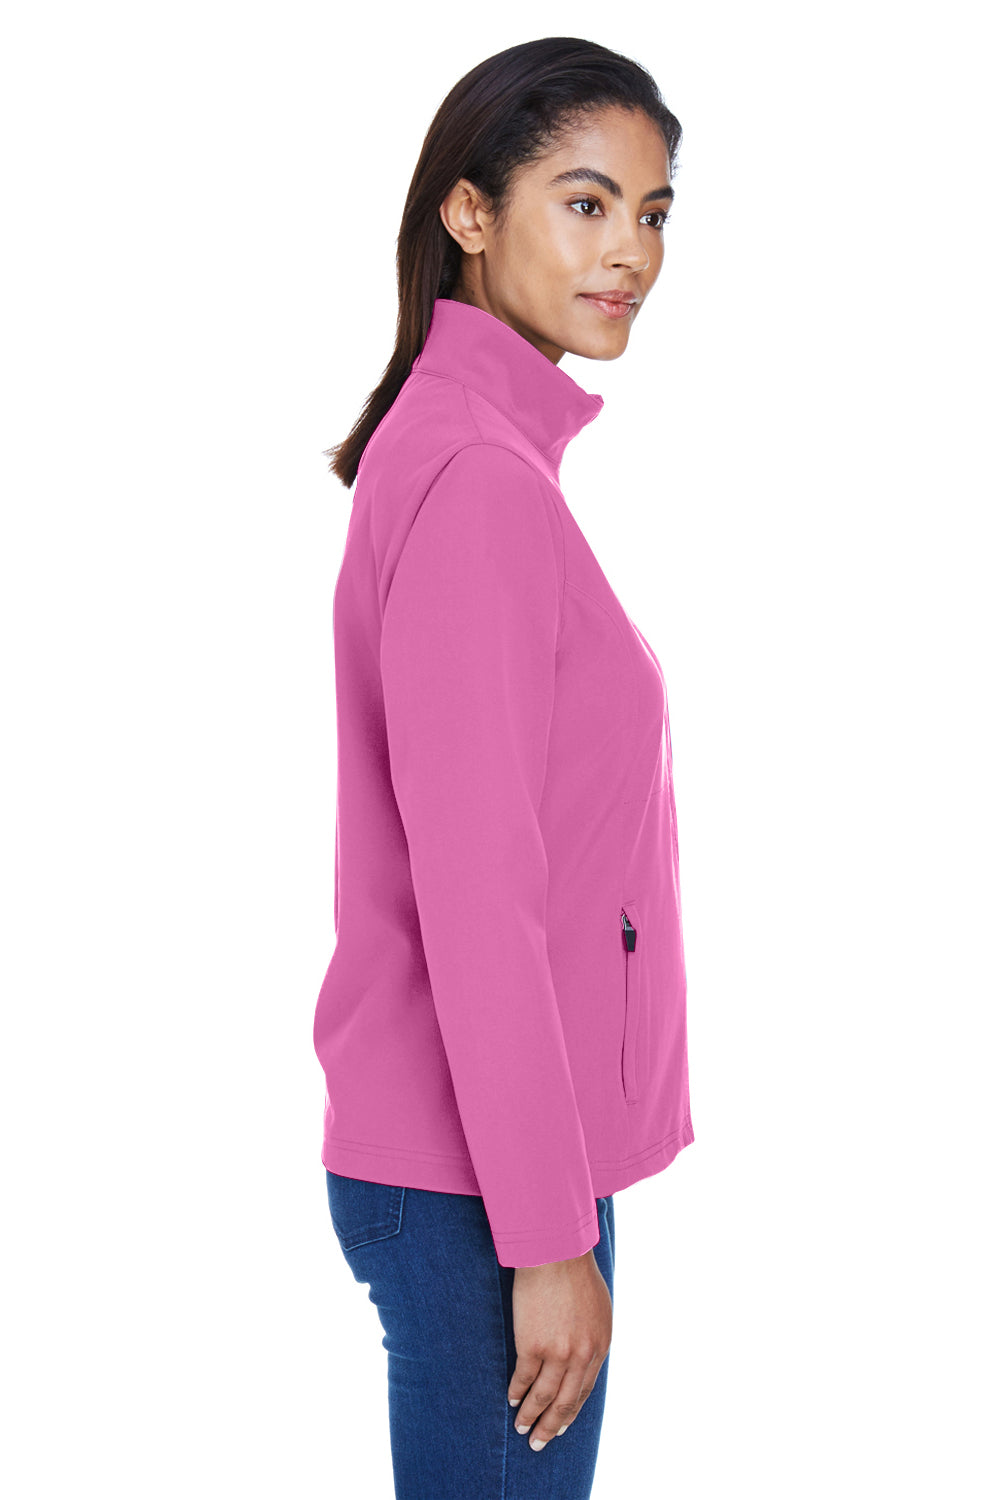 Team 365 TT80W Womens Leader Waterproof Full Zip Jacket Charity Pink Side